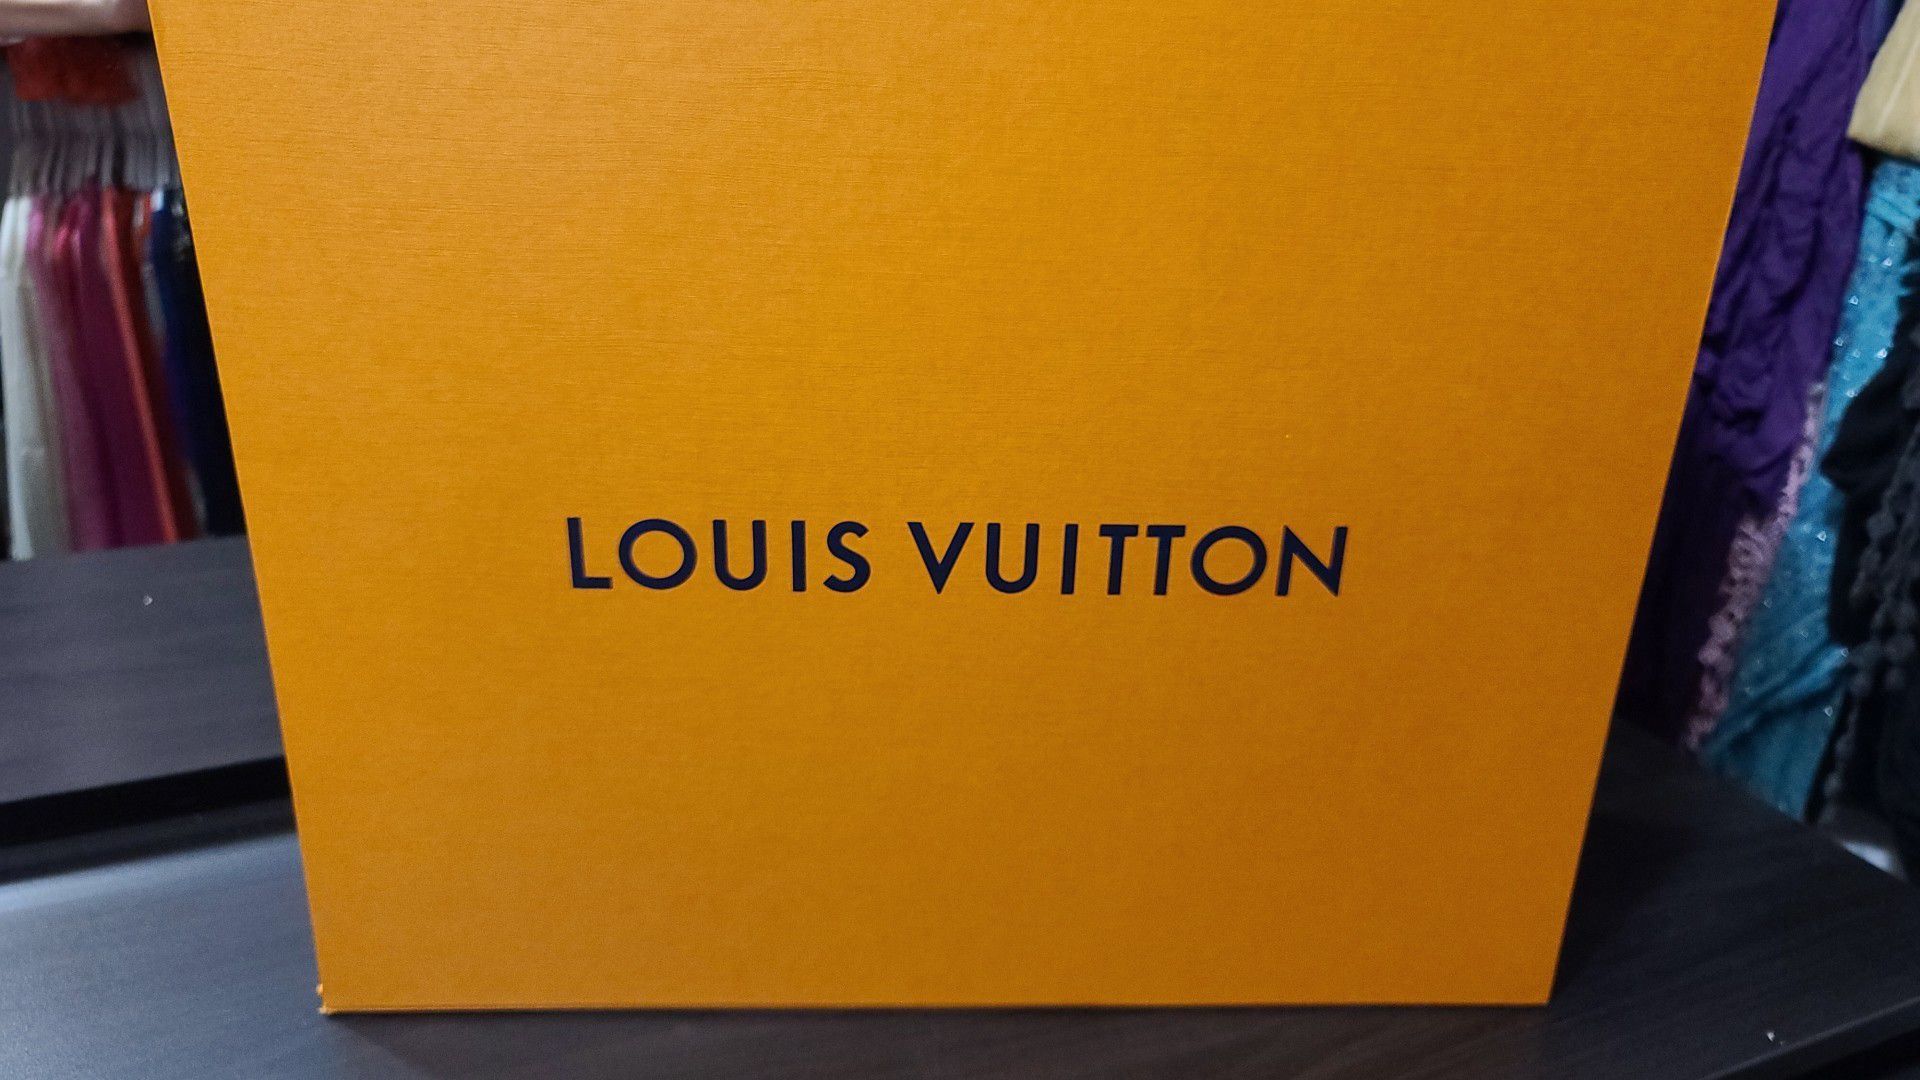 Louis Vuitton Empty Box for Sale in Newport Beach, CA - OfferUp